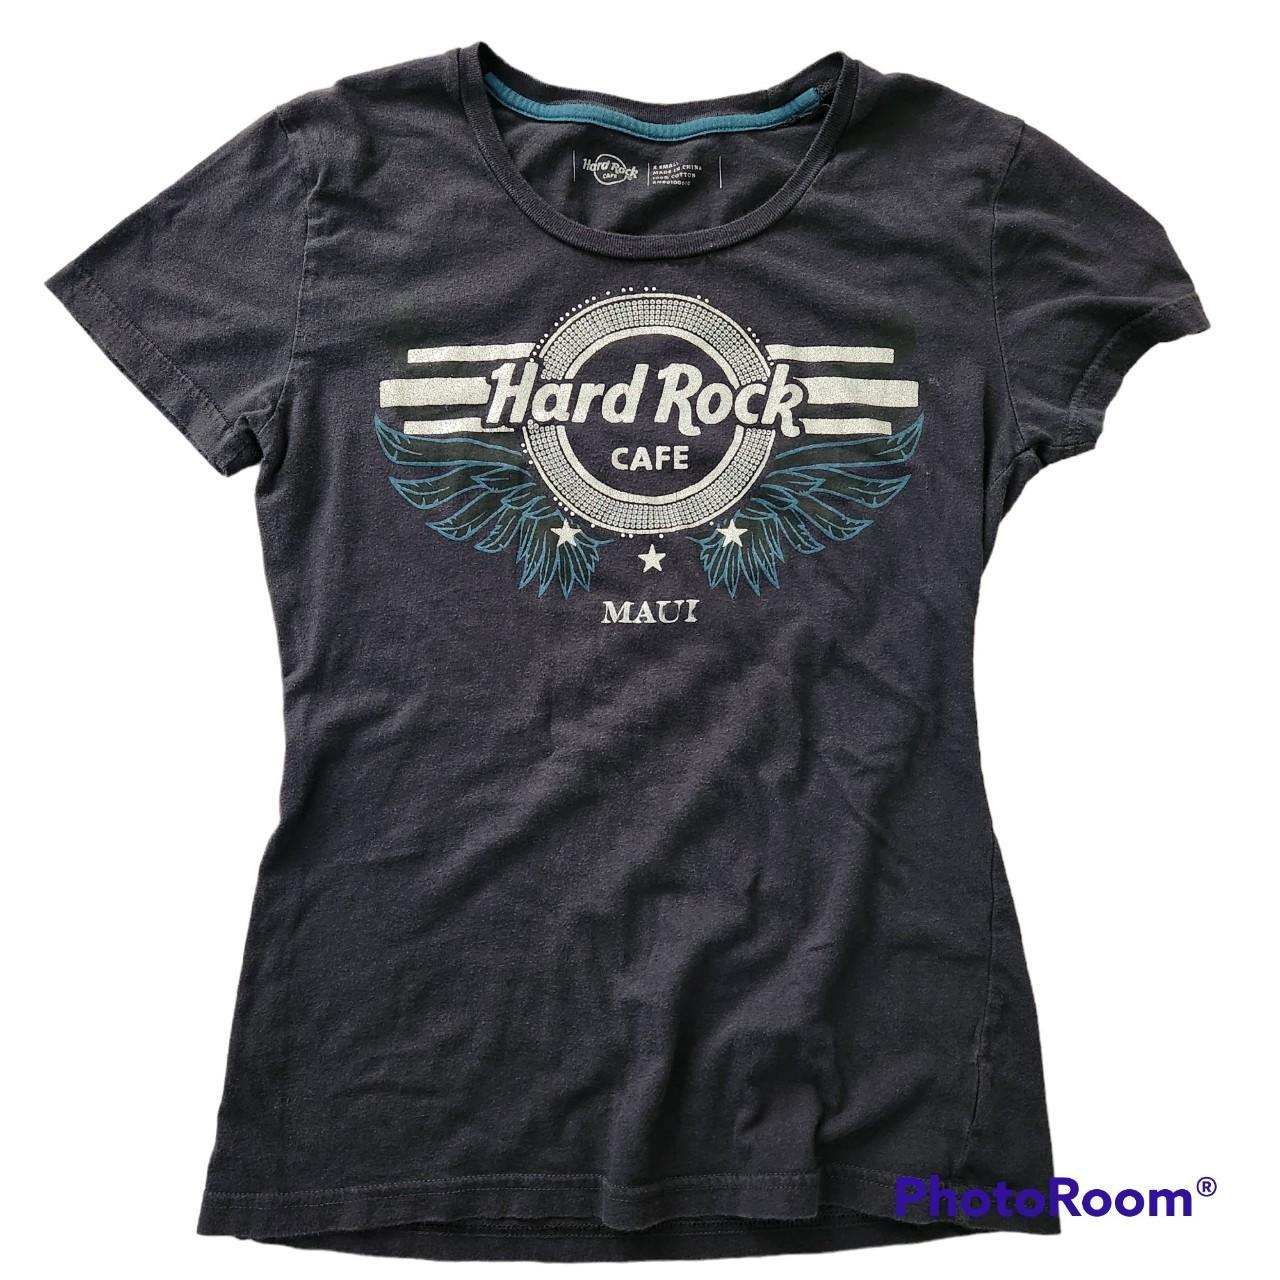 Hard Rock Cafe Women's Grey and Blue T-shirt